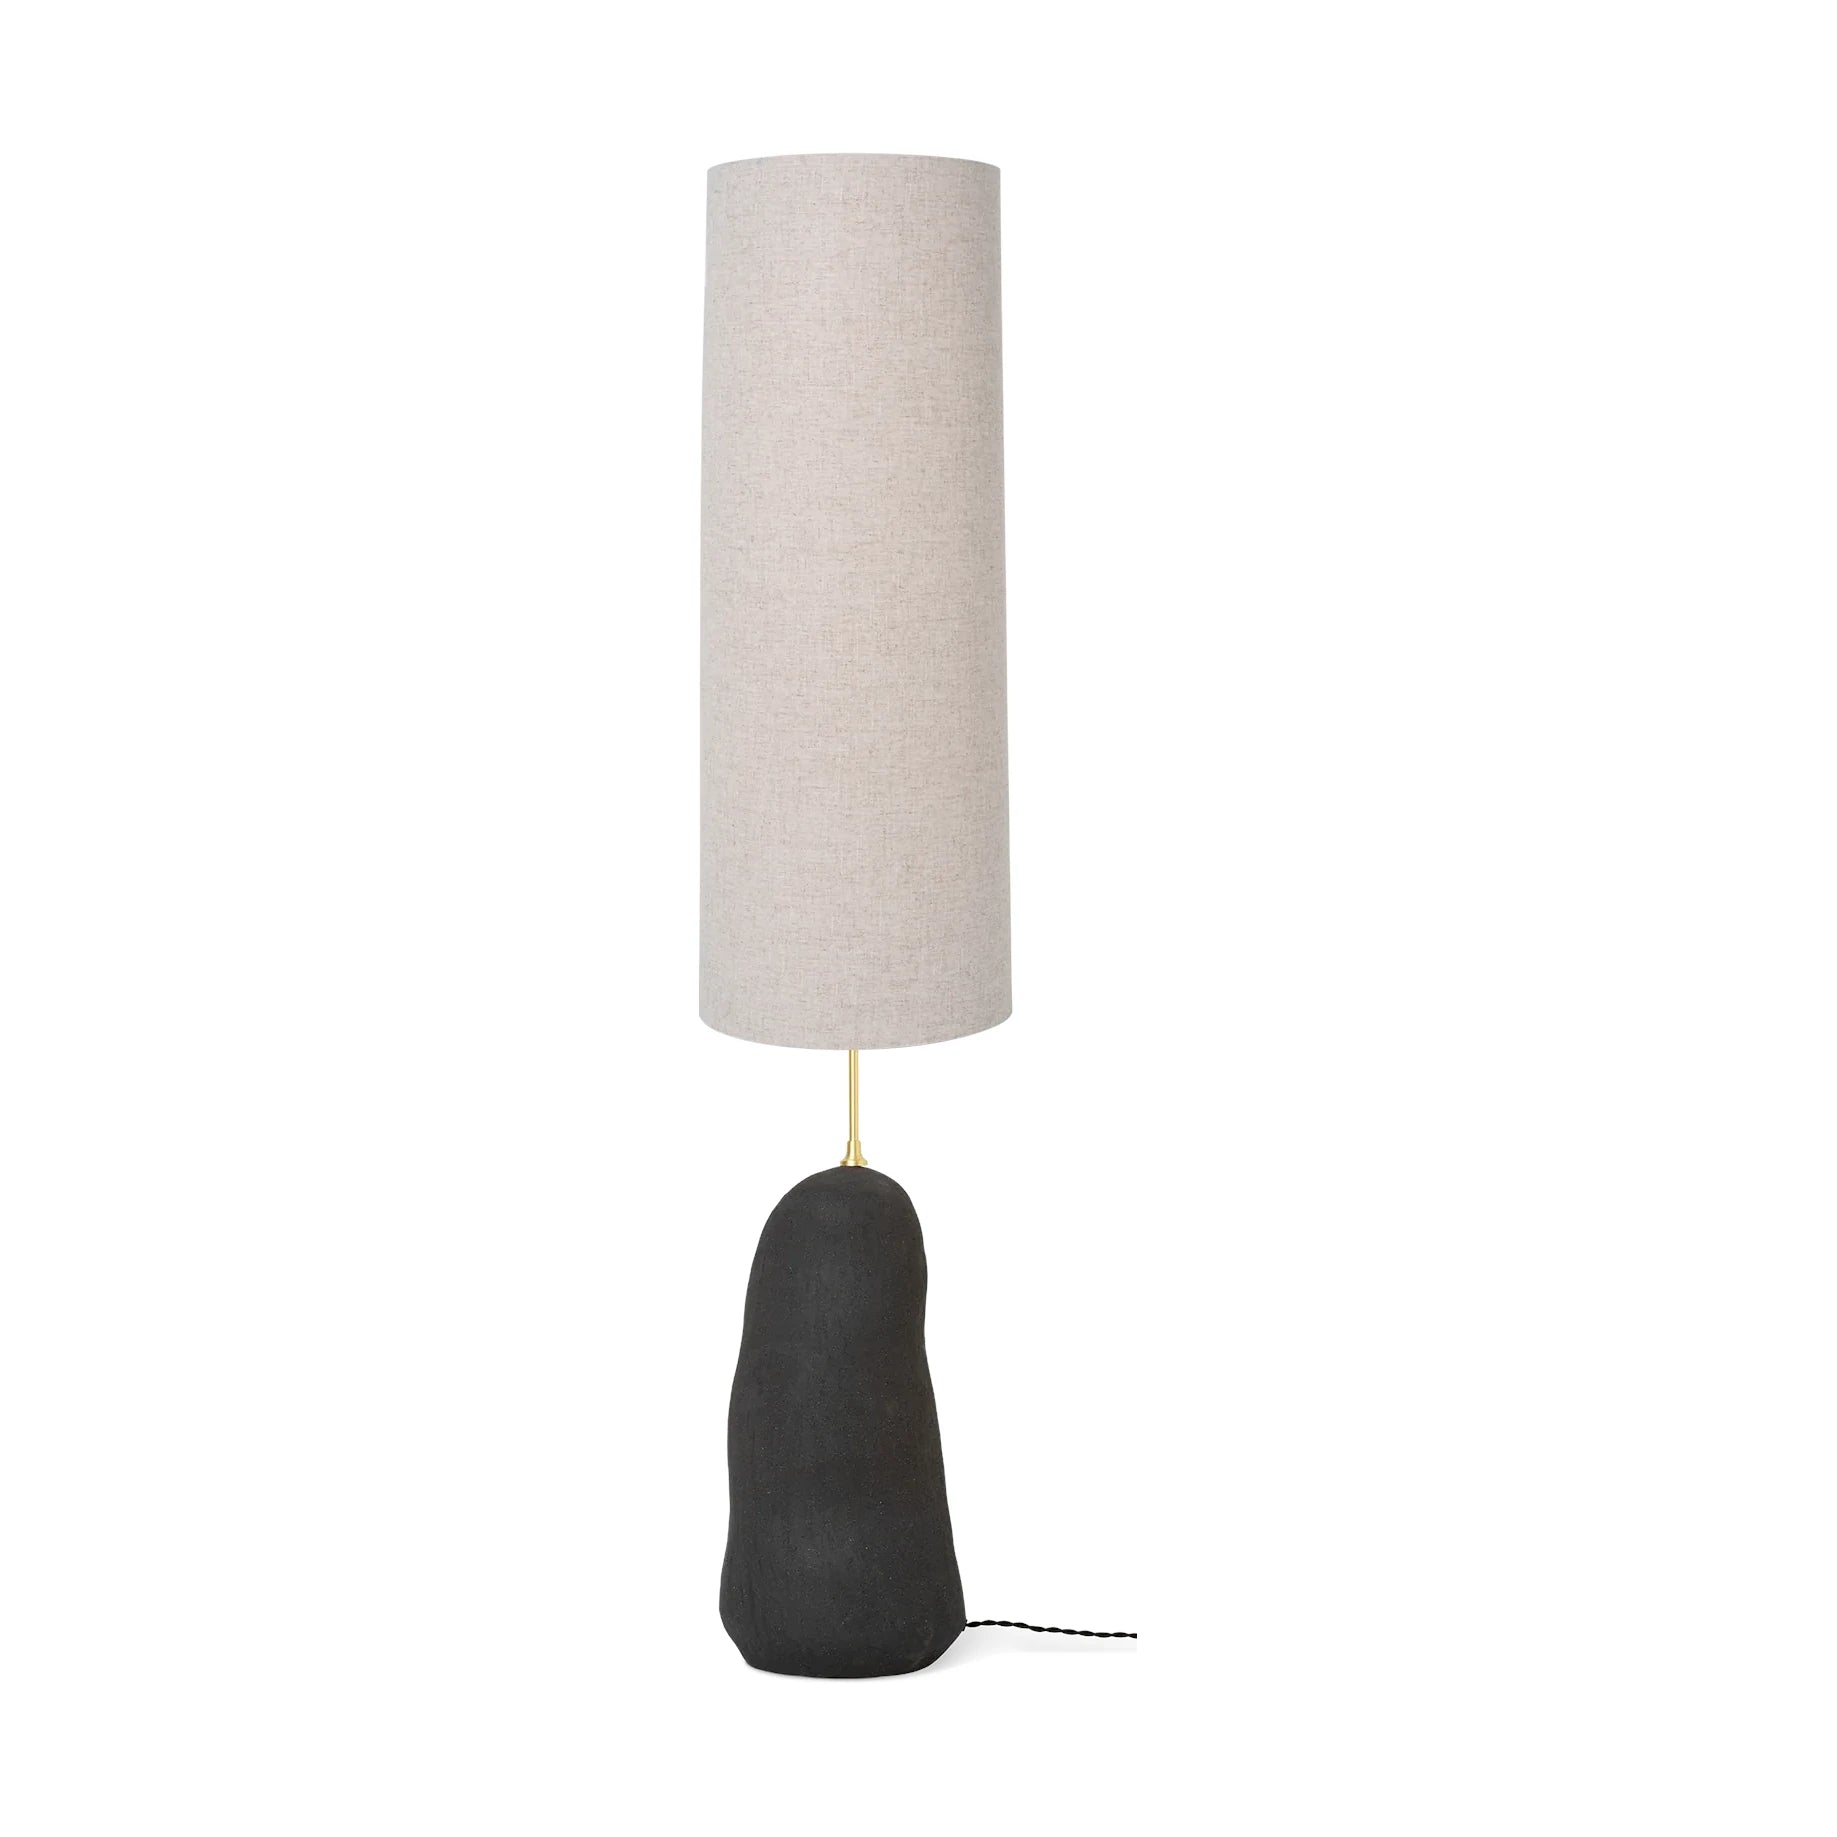 Hebe floor lamp base | Ceramic | Dark grey or Off-white - Lifestory